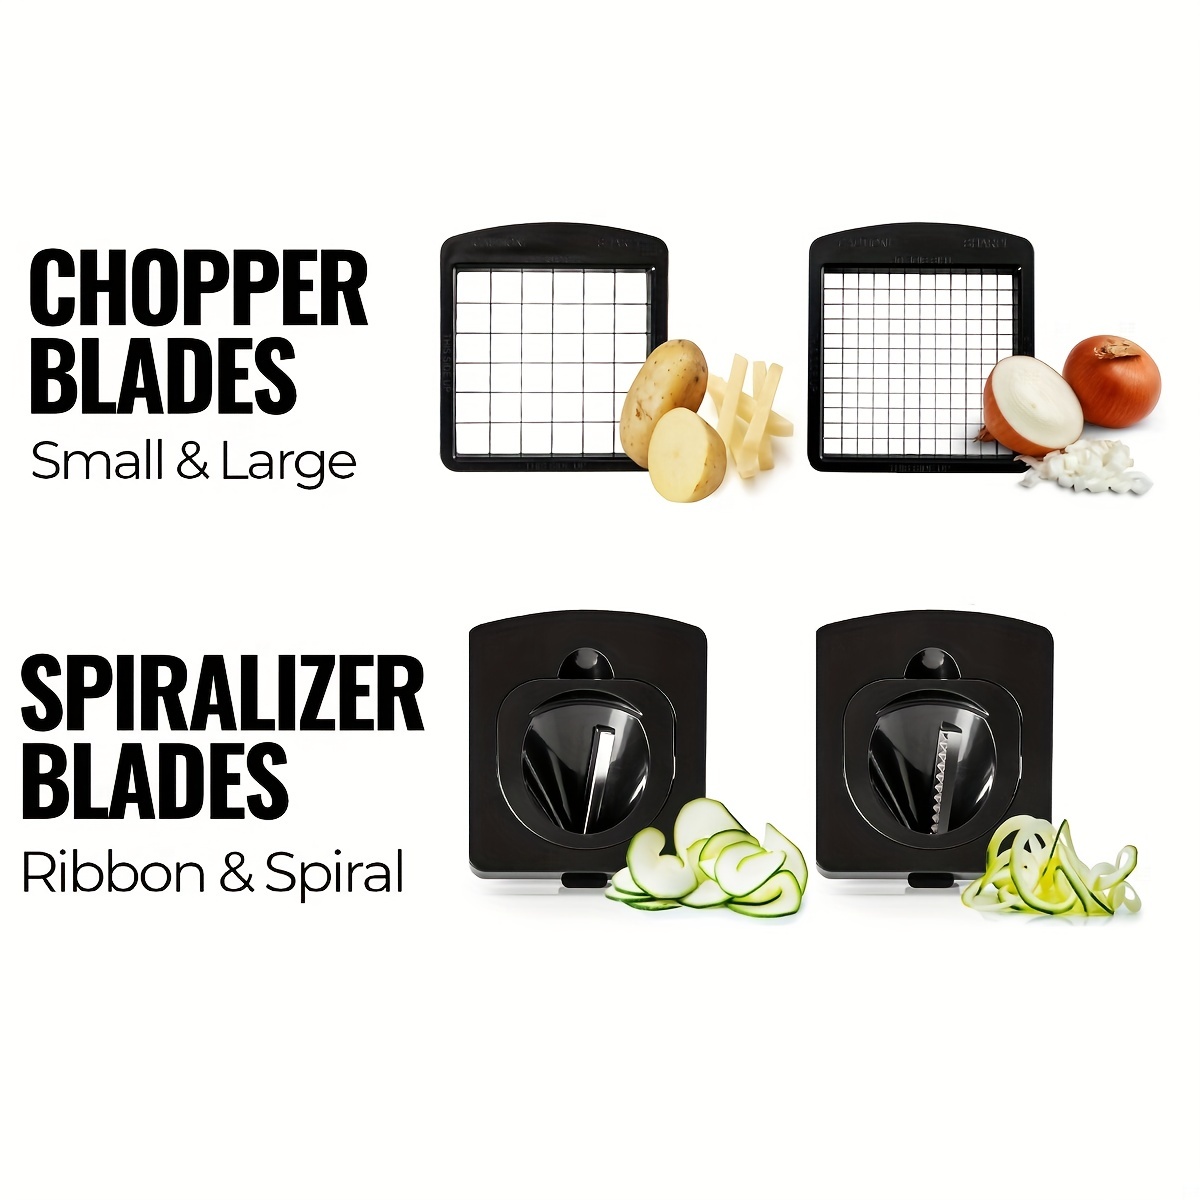  Fullstar Vegetable Chopper - Spiralizer Vegetable Slicer -  Onion Chopper with Container - Pro Food Chopper - Slicer Dicer Cutter - (4  in 1, Black) : Home & Kitchen